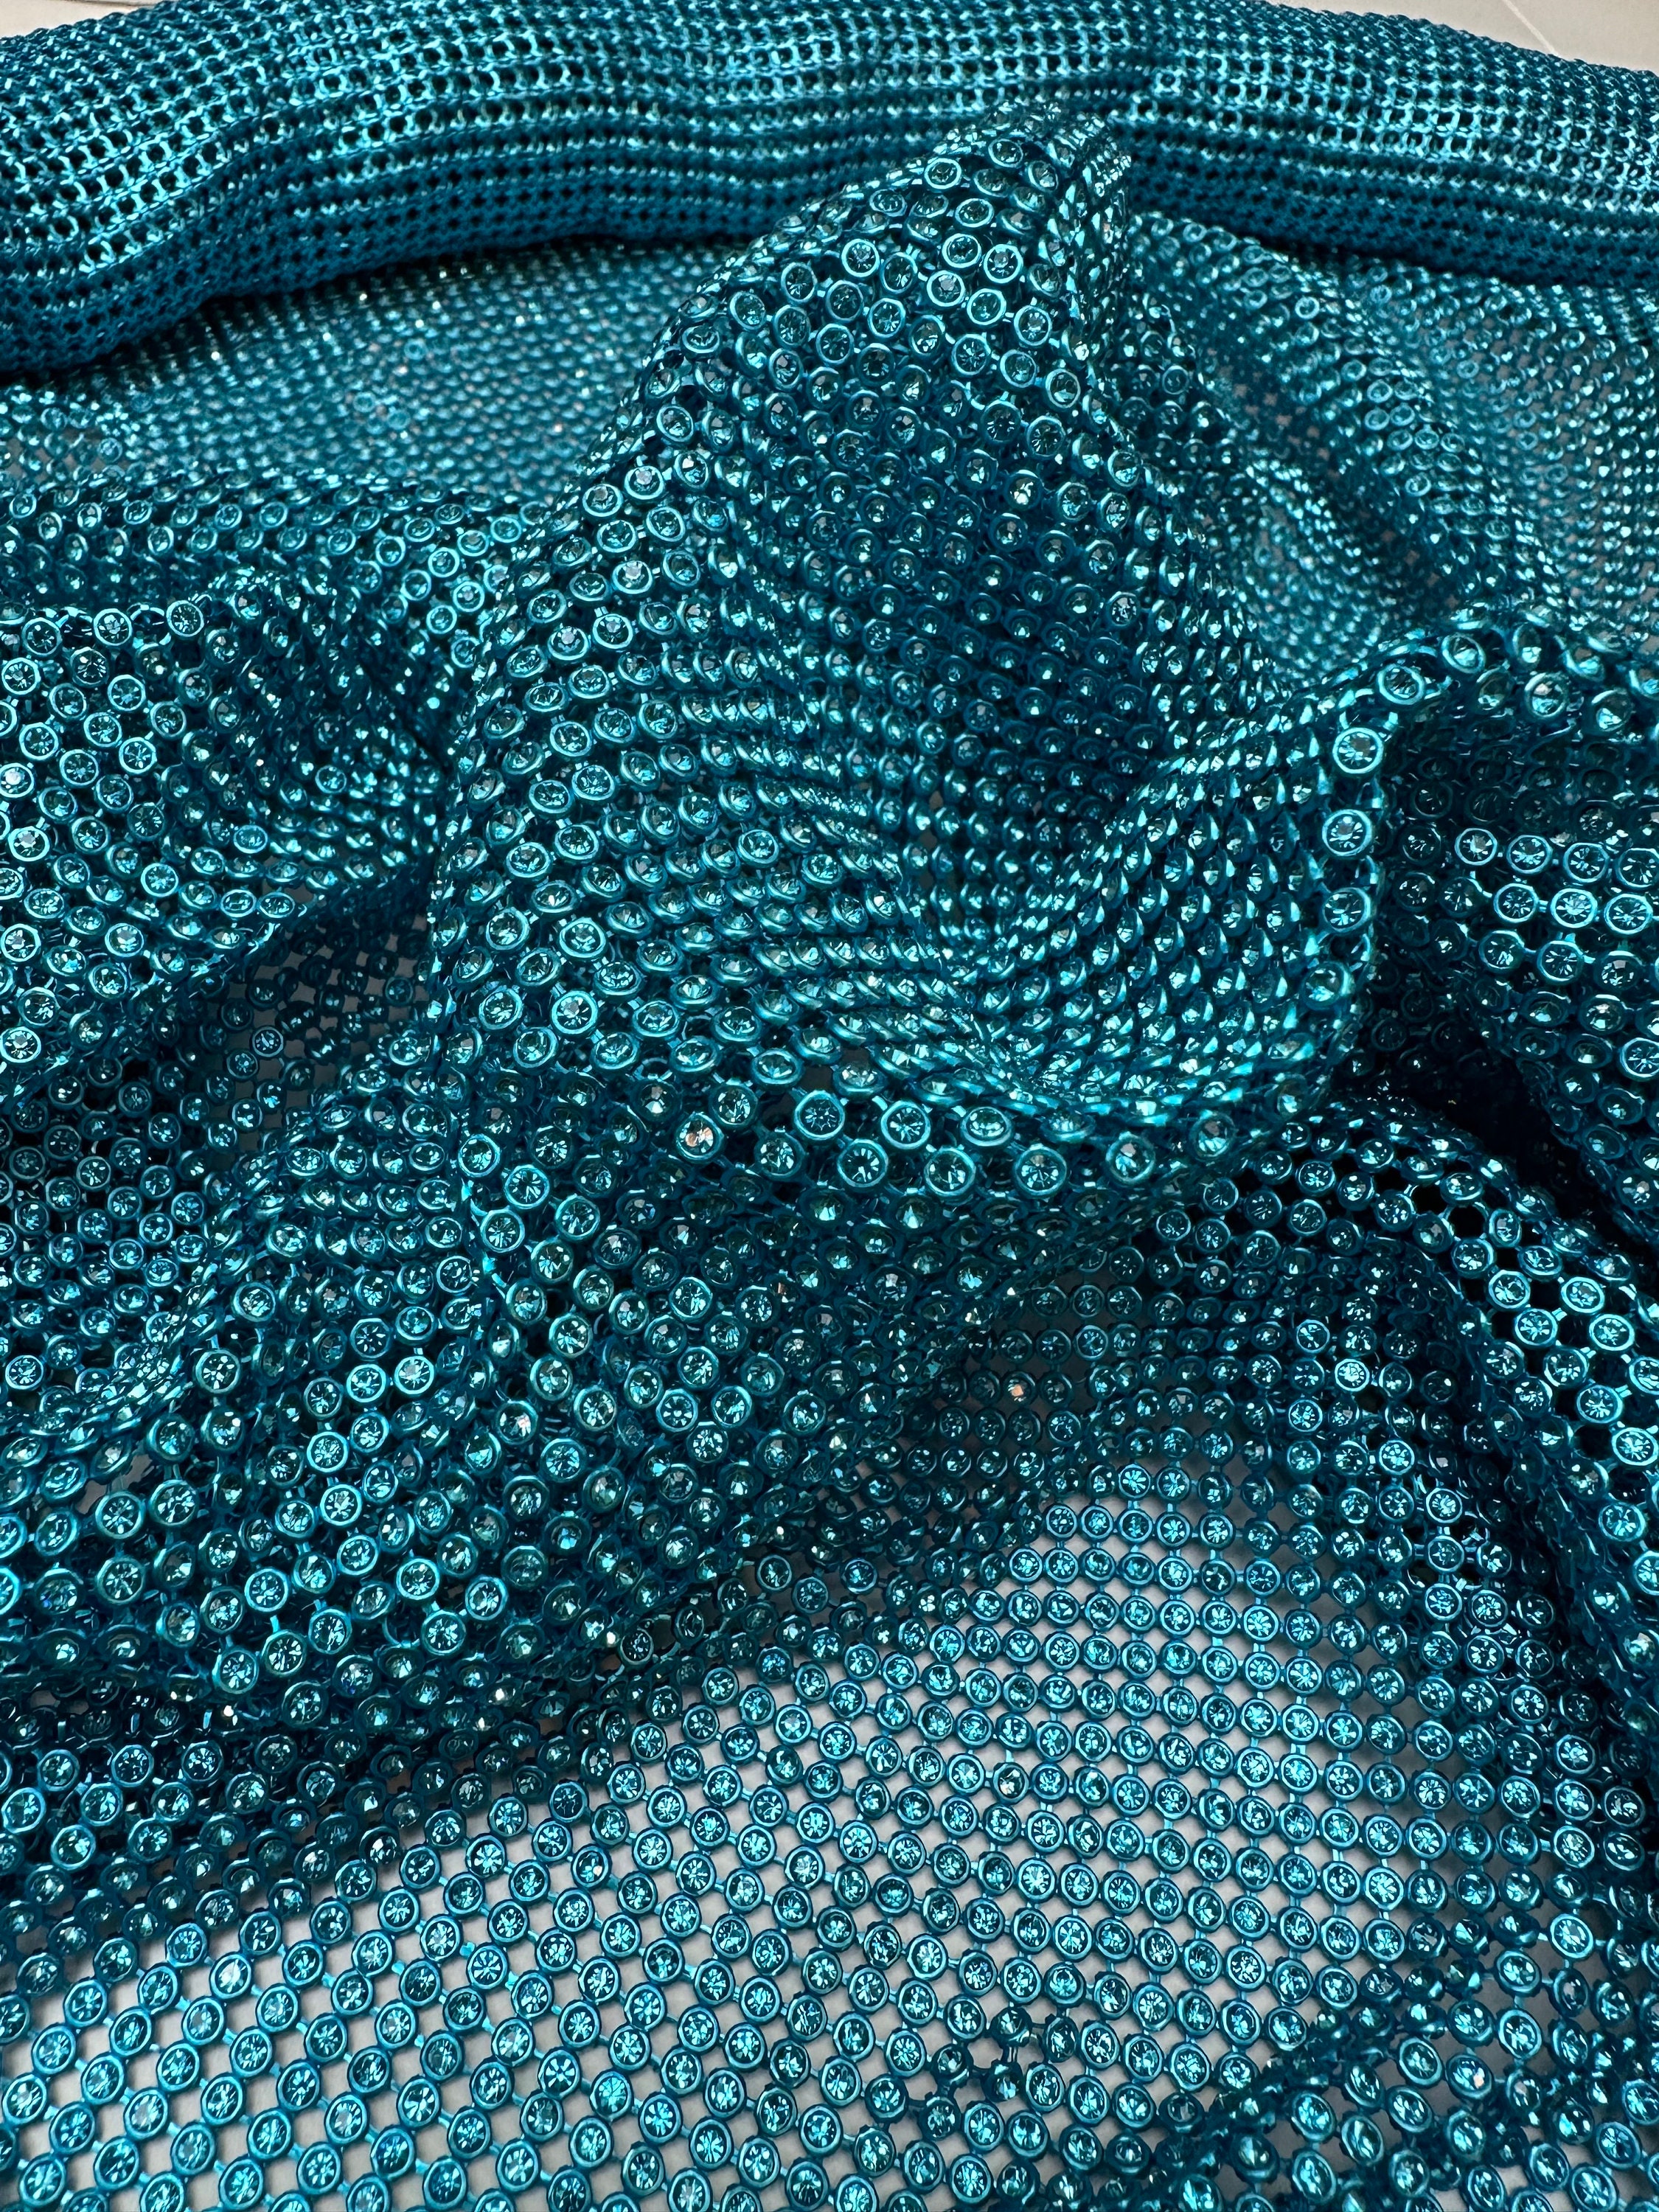 Rhinestone Aluminum Scale Mesh Fabric, Blue Moon Fabrics